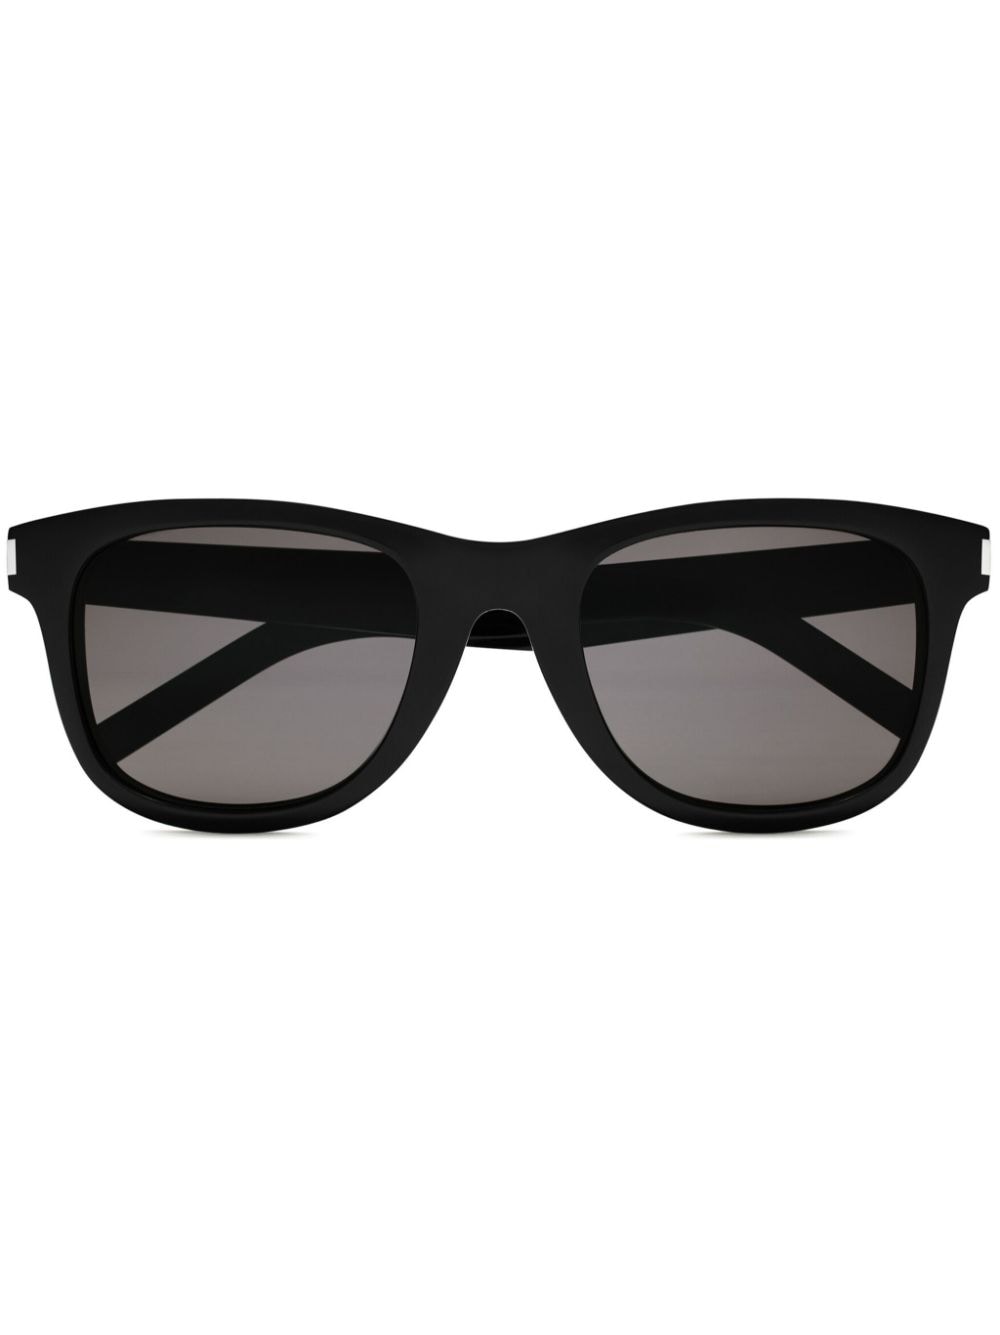 Saint Laurent Eyewear Classic 51 sunglasses - Black von Saint Laurent Eyewear